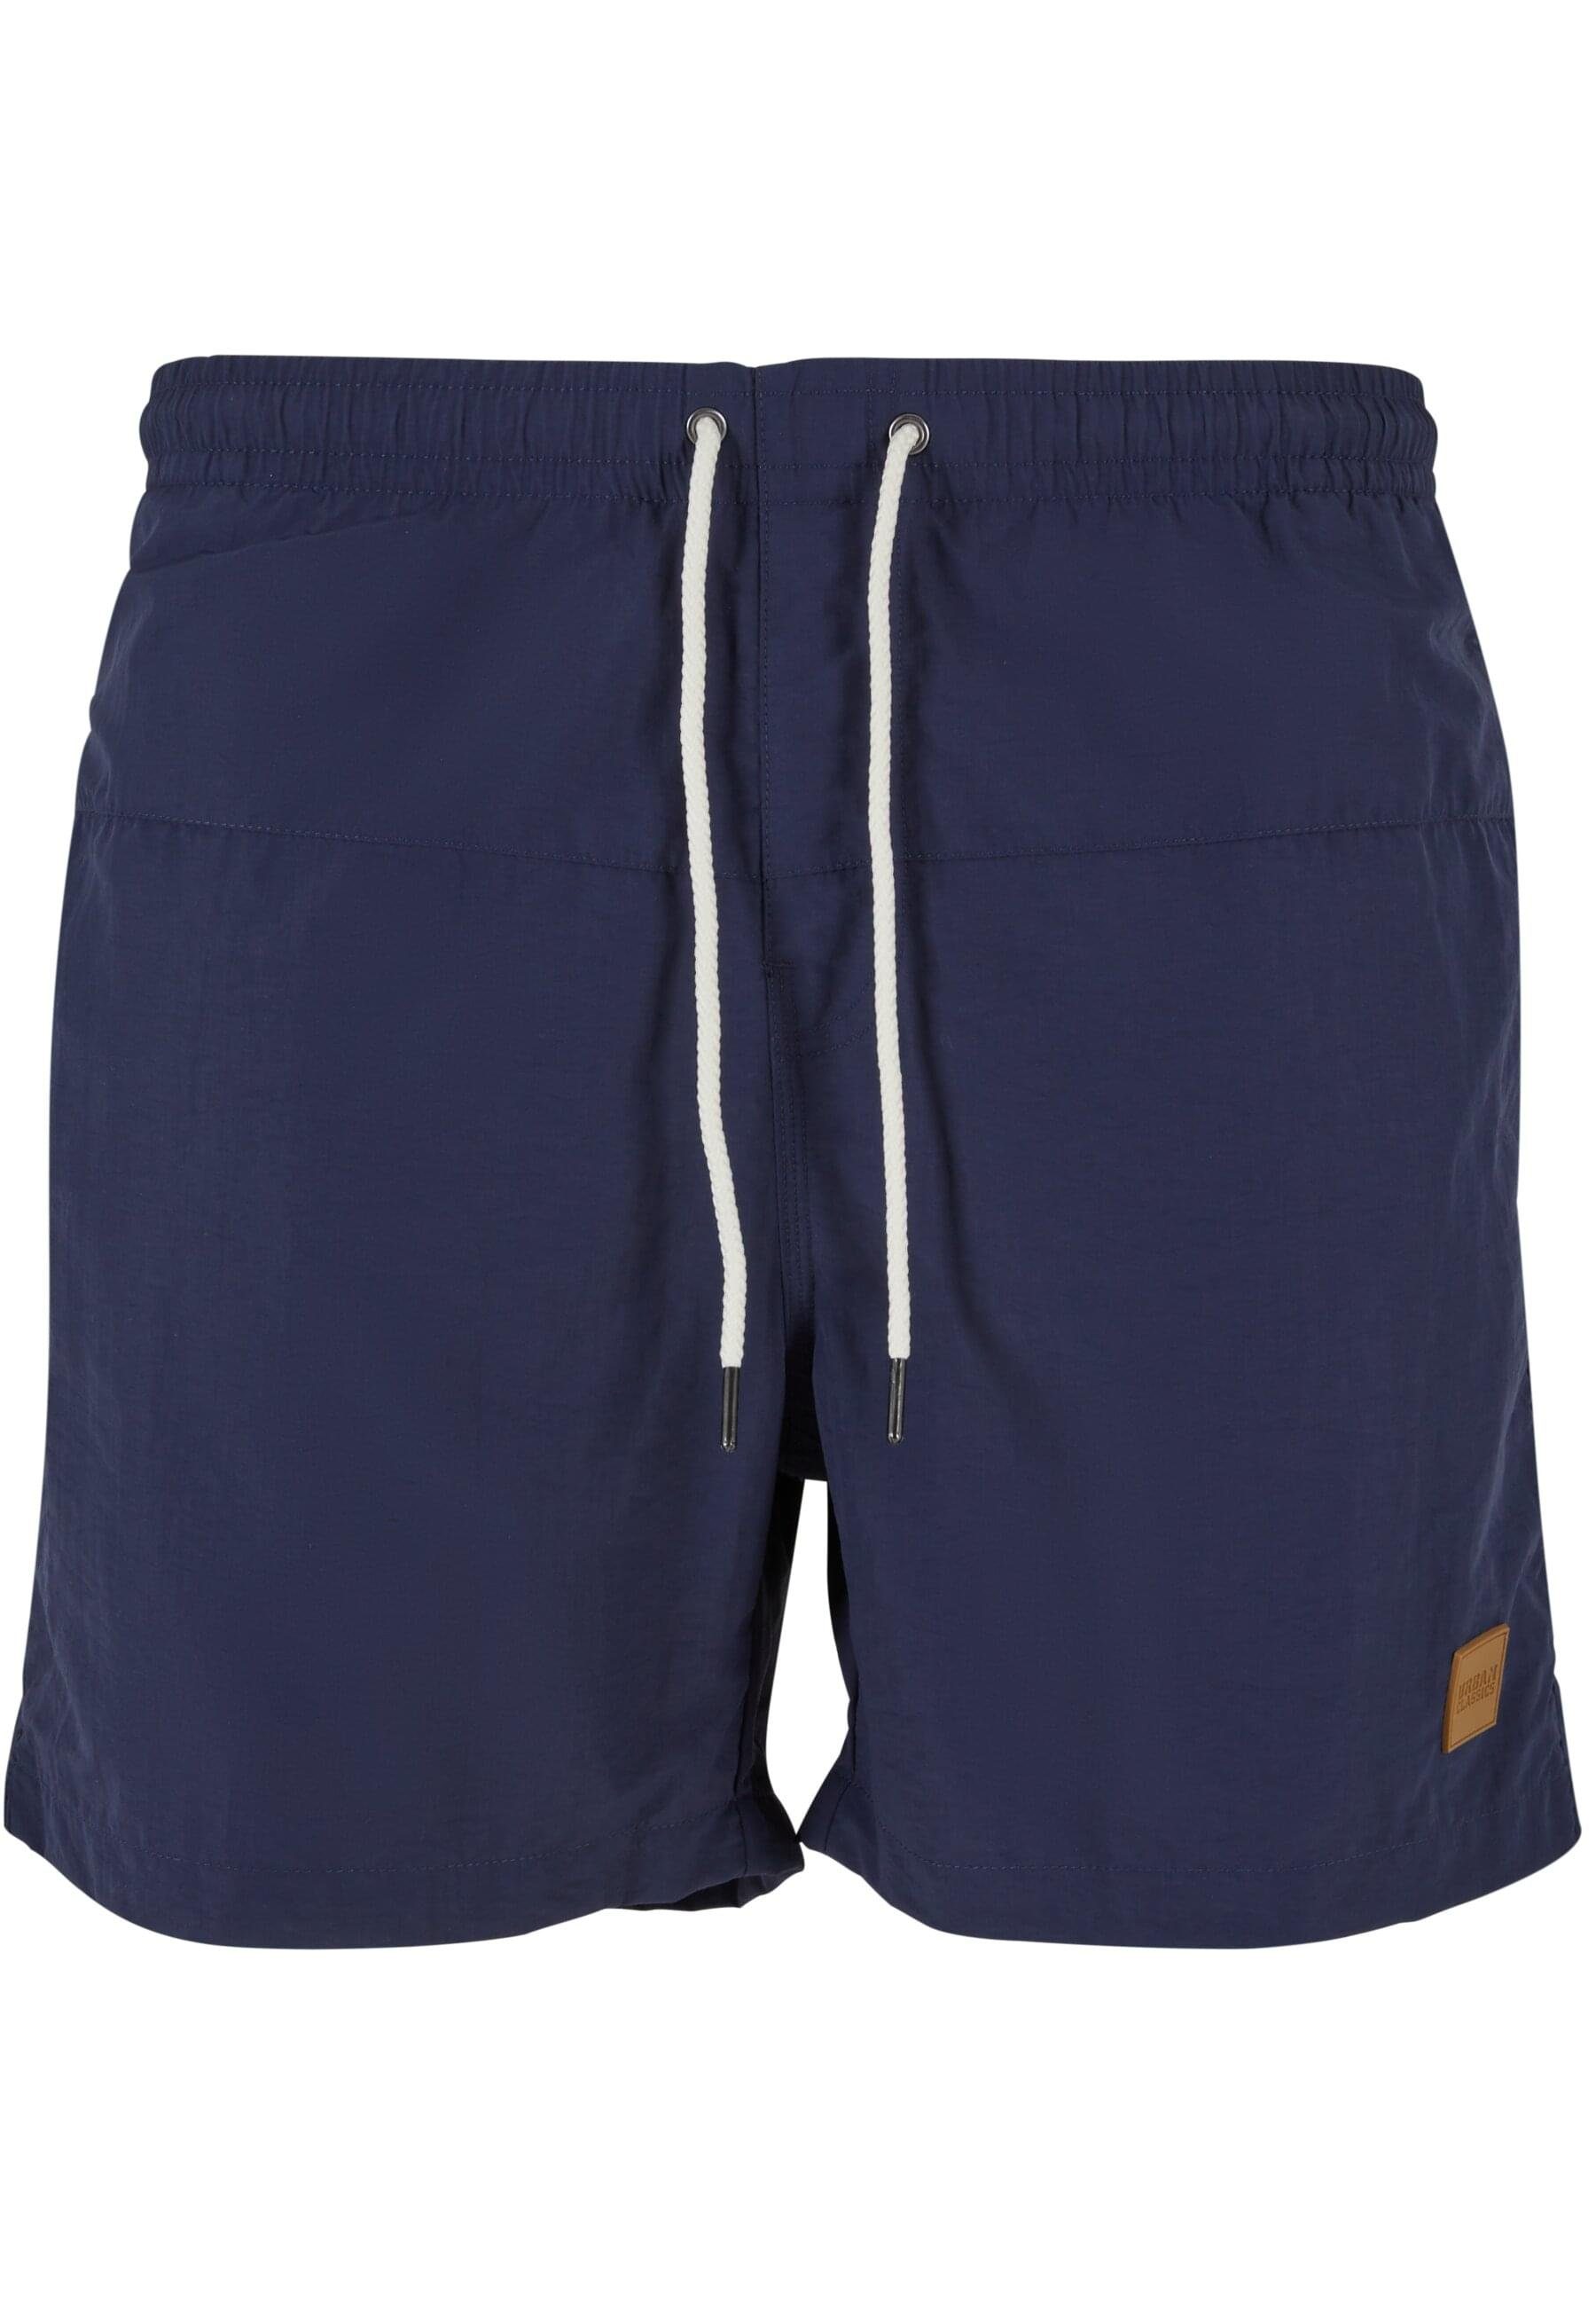 URBAN CLASSICS Badeshorts Herren Swim navy/navy Shorts